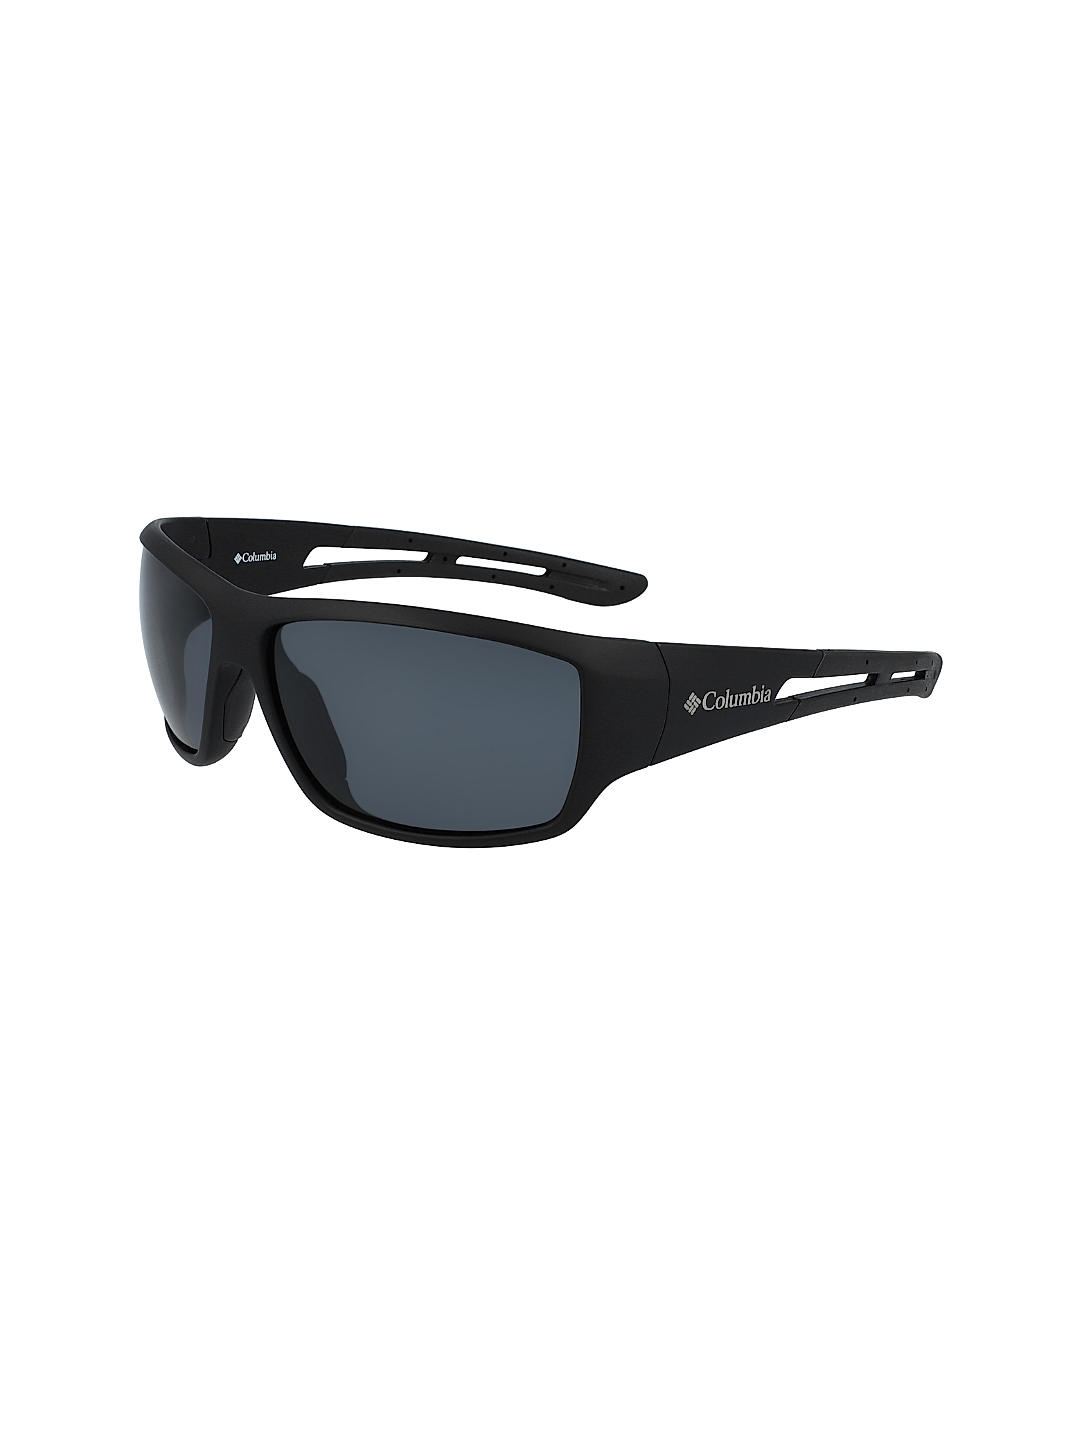 Buy Black Utilizer Sunglasses for Men Online at Columbia